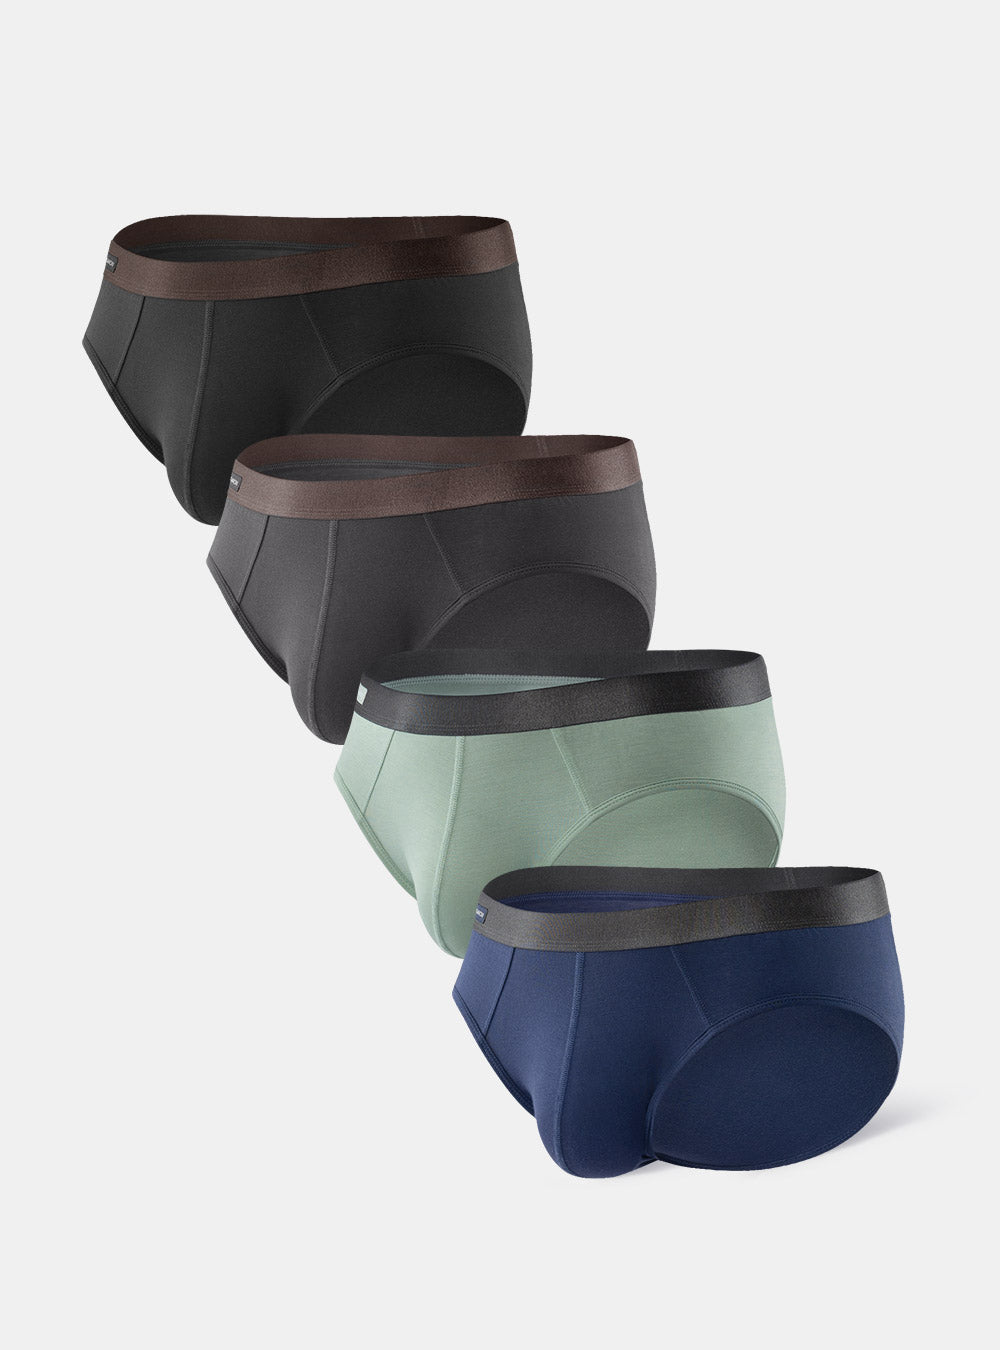 David Archy Underwear DANK08B Men's Rayon Breathable Ultra Soft